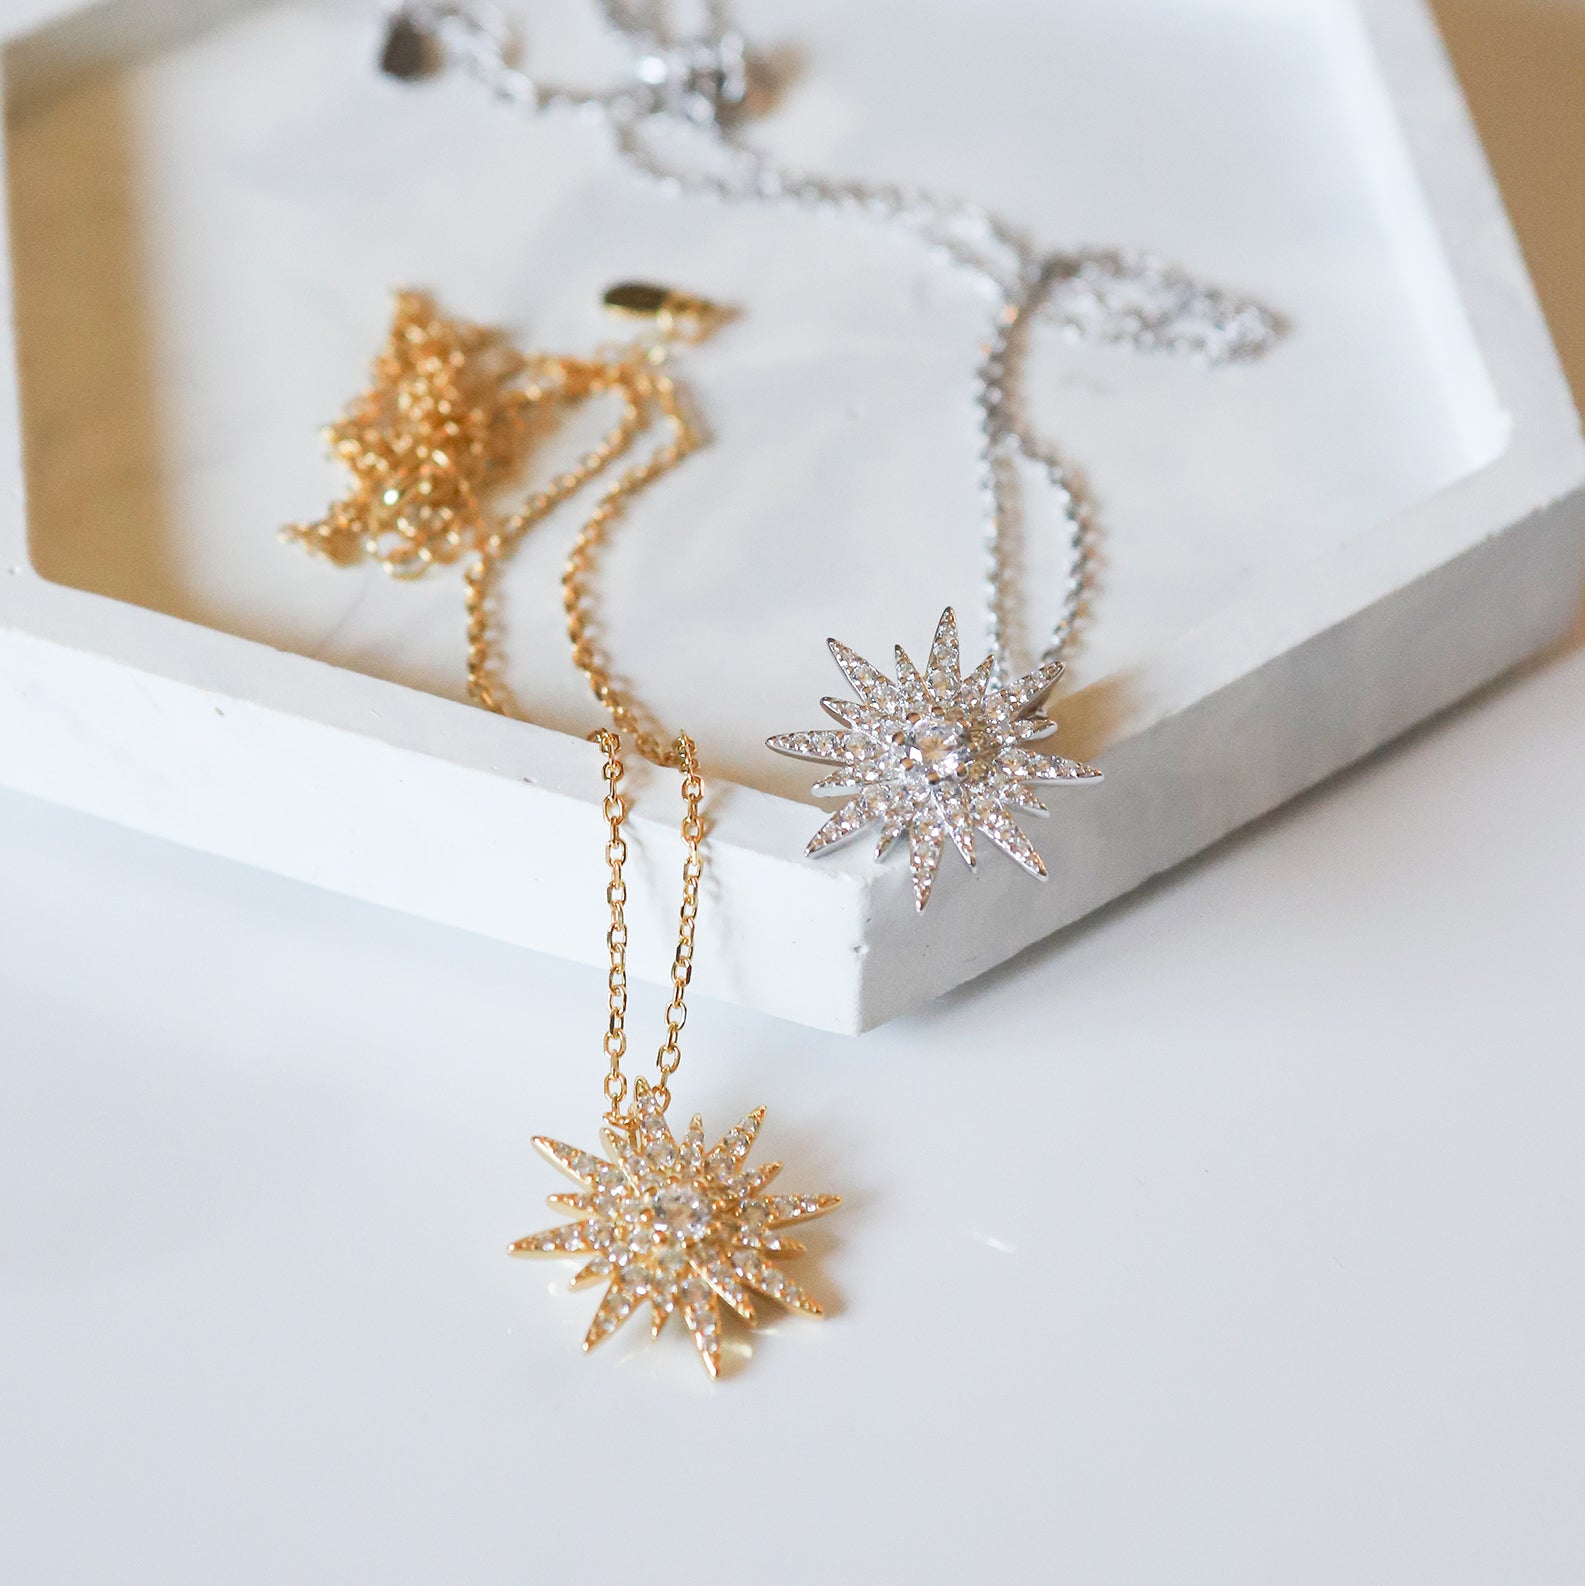 Estella Starburst Necklace | 18k Gold Plated